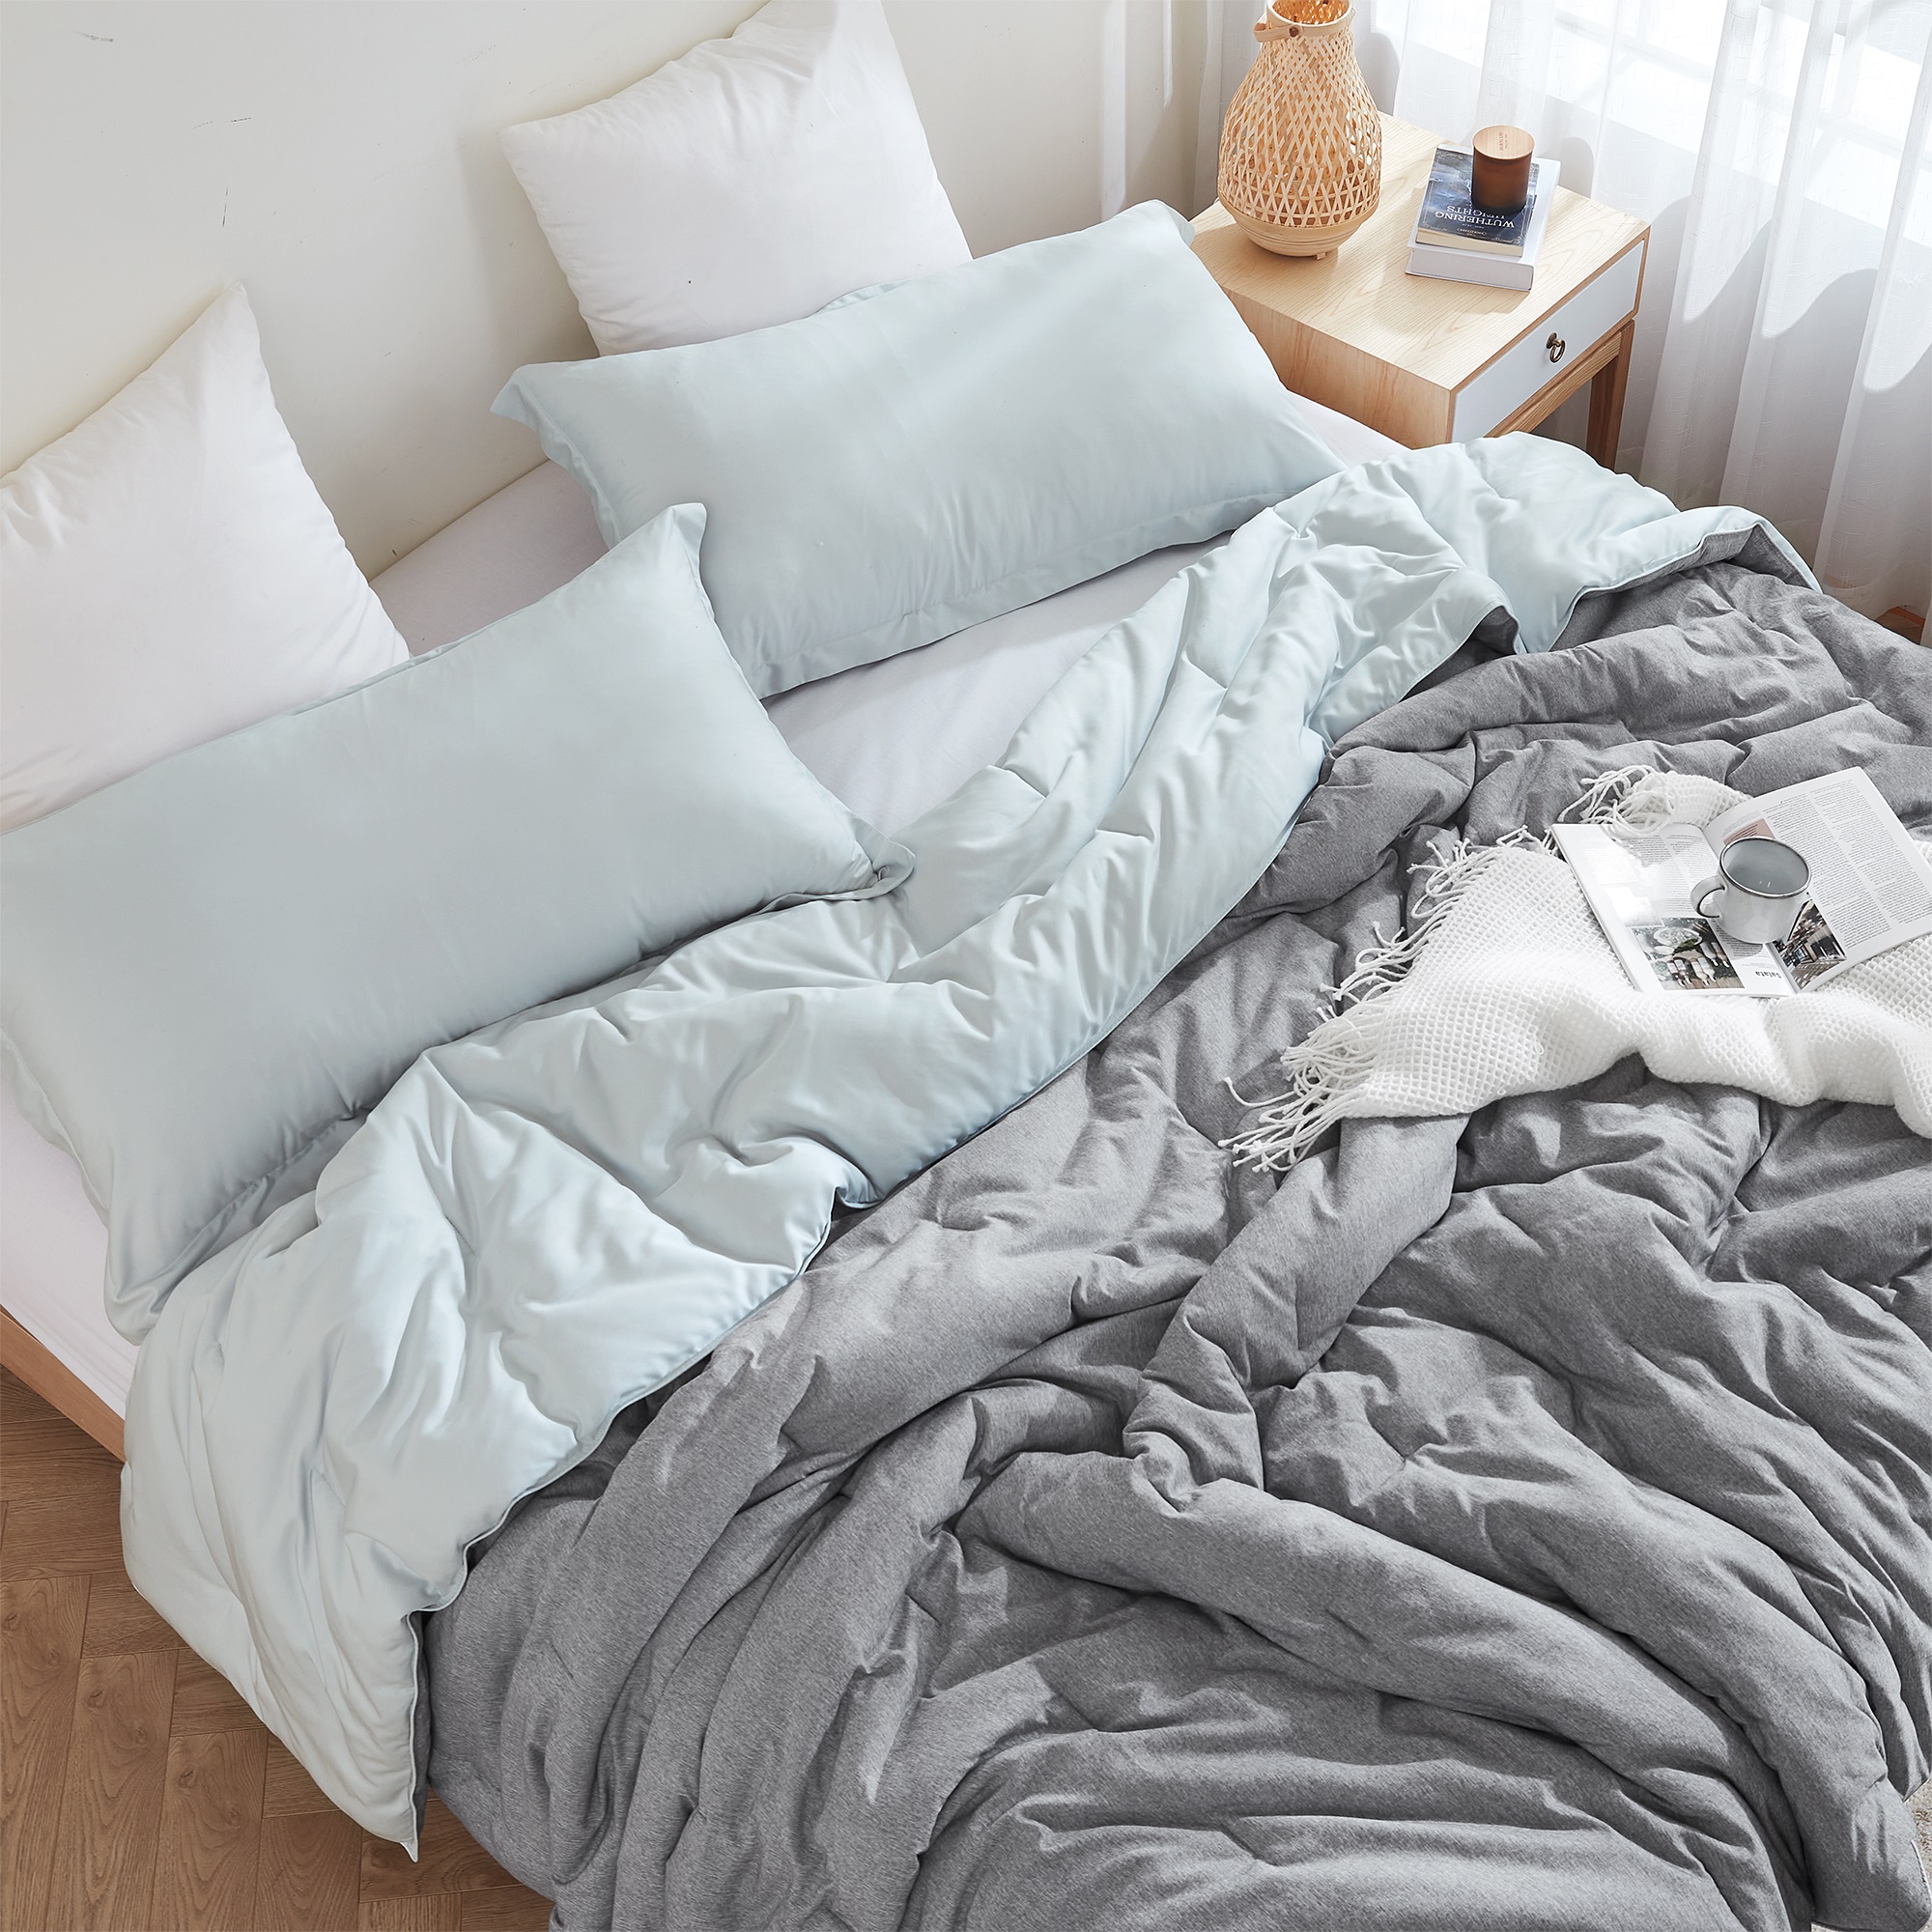 Ice Panda - Coma Inducer Oversized Cooling Comforter - Glacier Gray